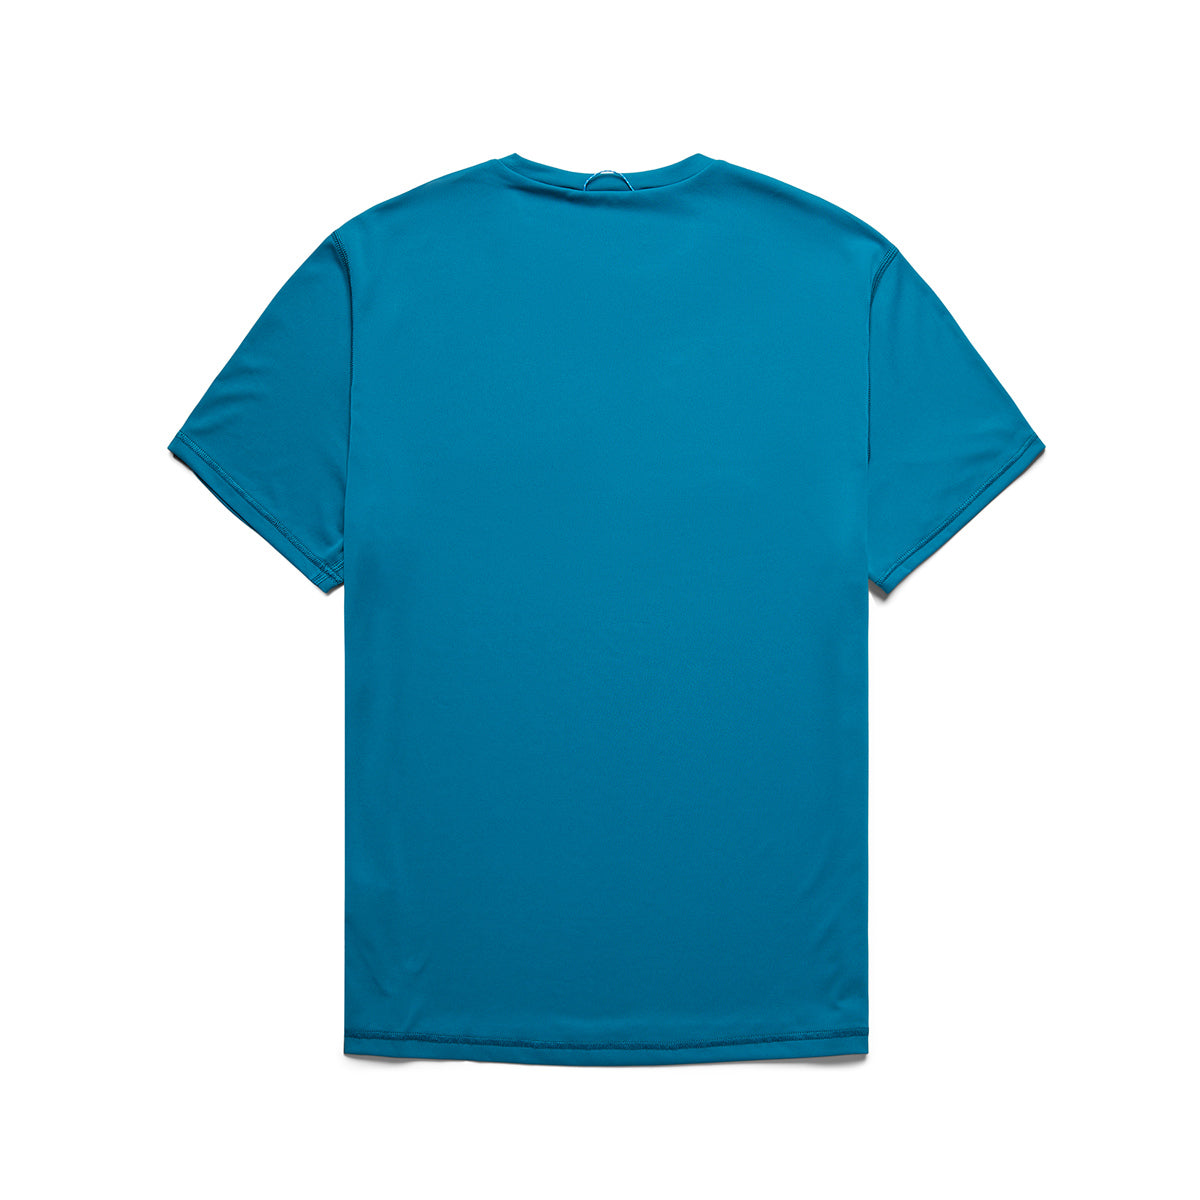 Cotopaxi Fino Tech Tee - MENS コトパクシ フィノ テック Tシャツ メンズ